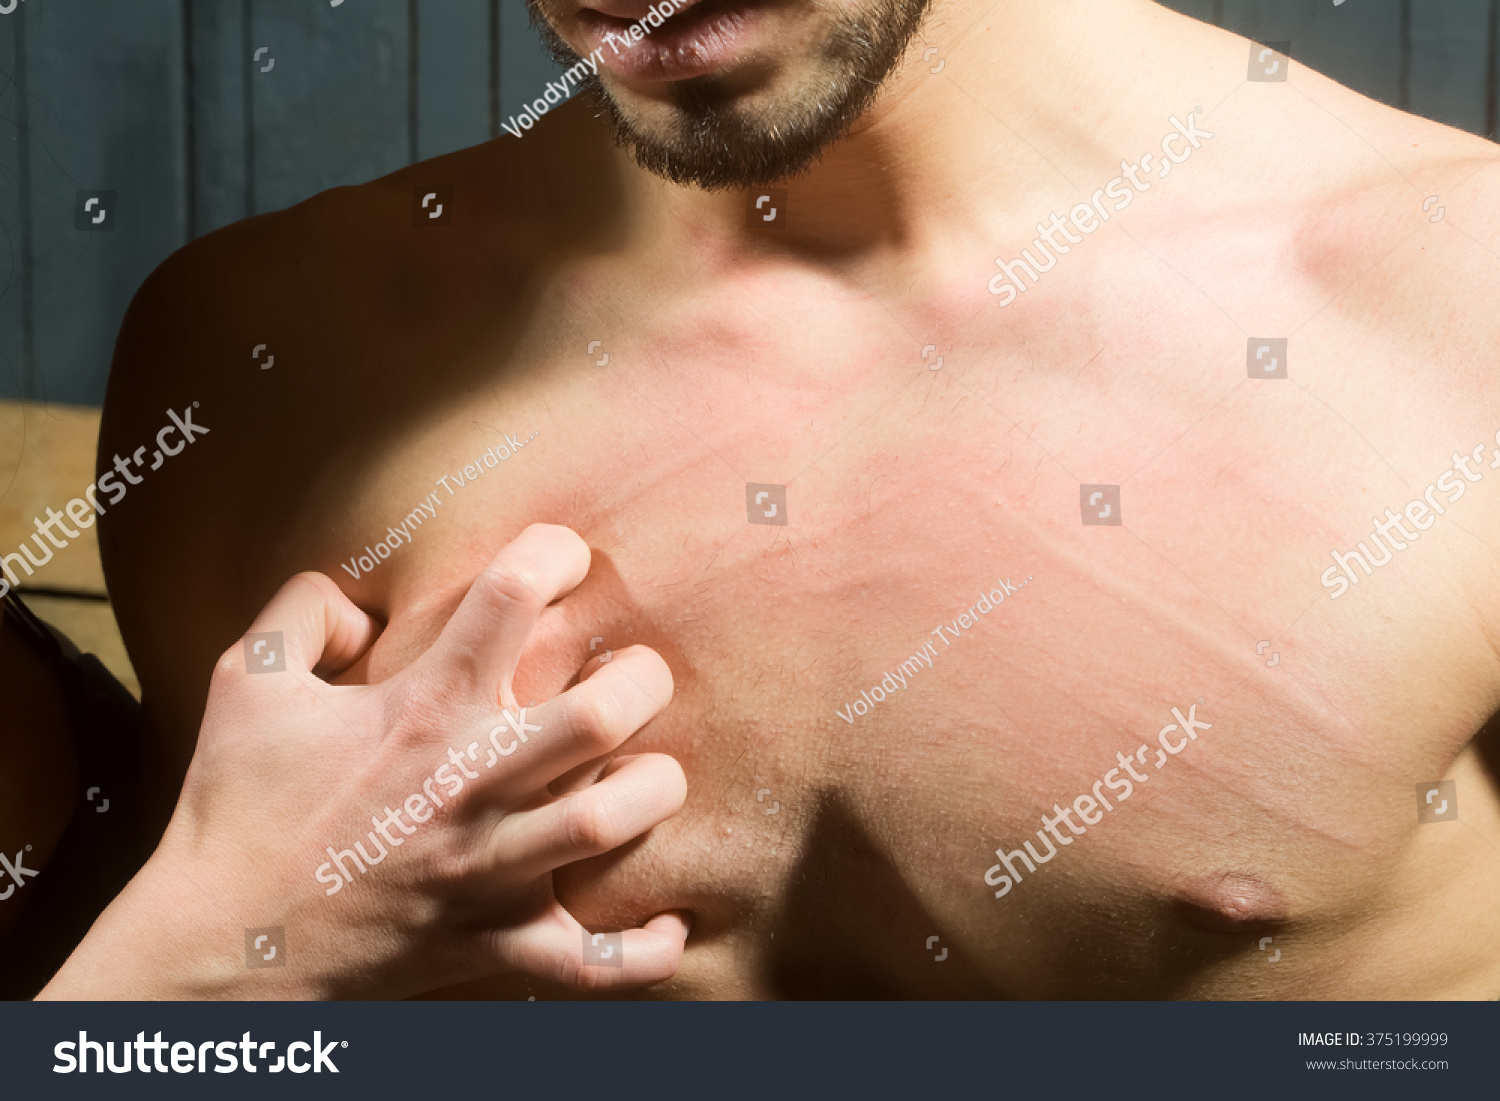 важна ли грудь для мужчин фото 98